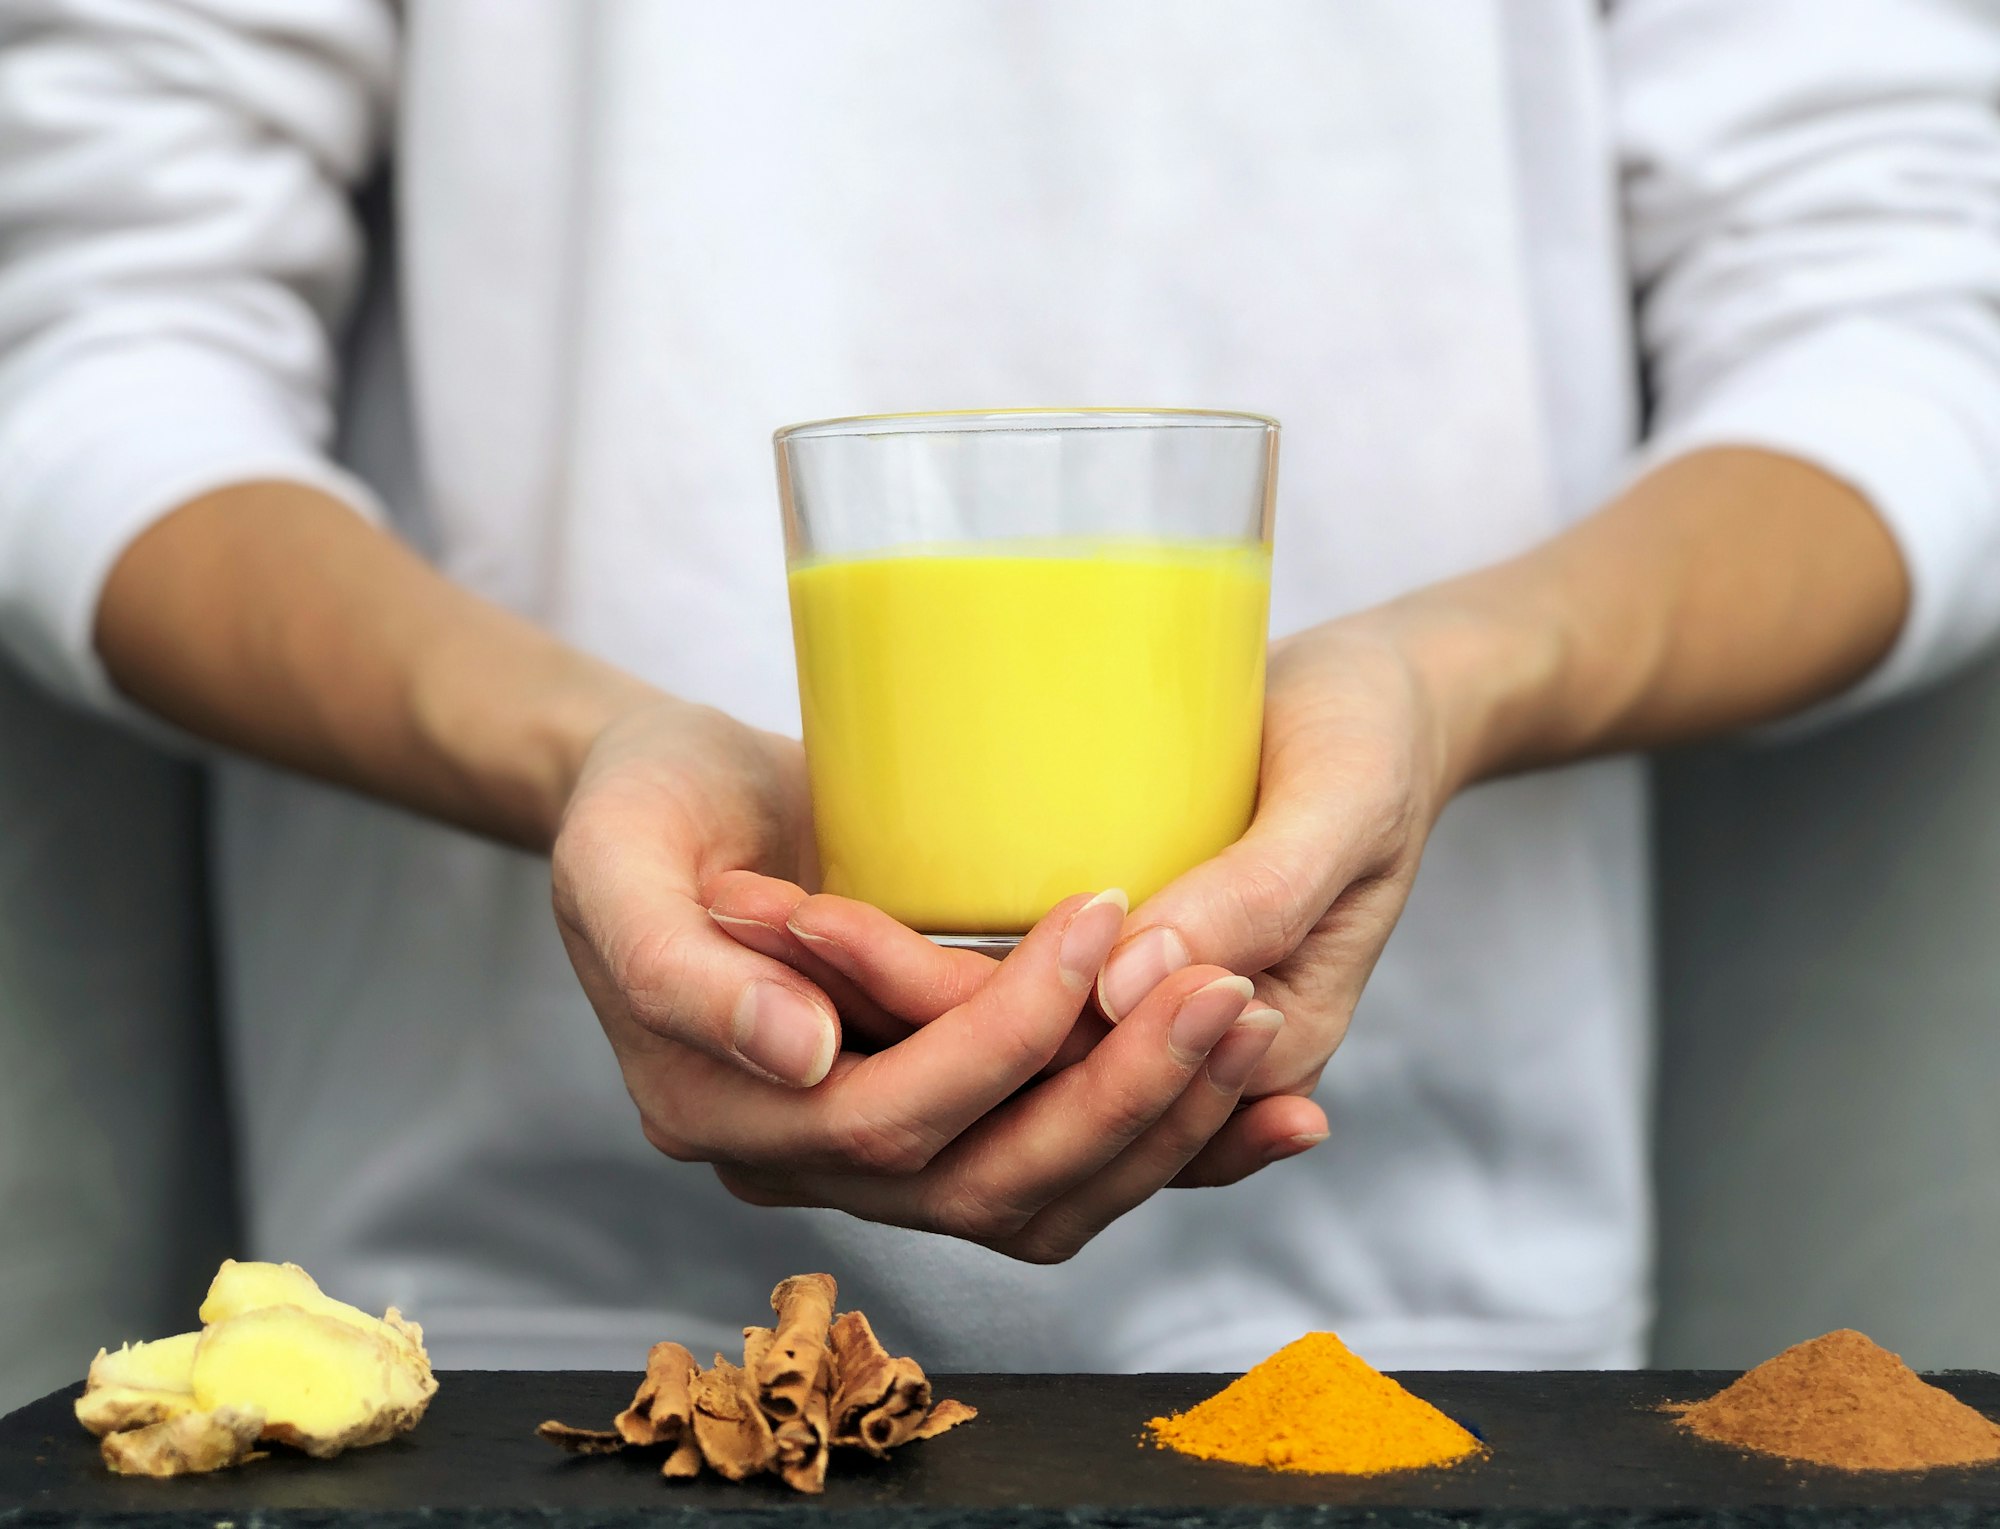 Hands holding a glass of golden milk (turmeric milk) - alternative medicine concept, naturopathy